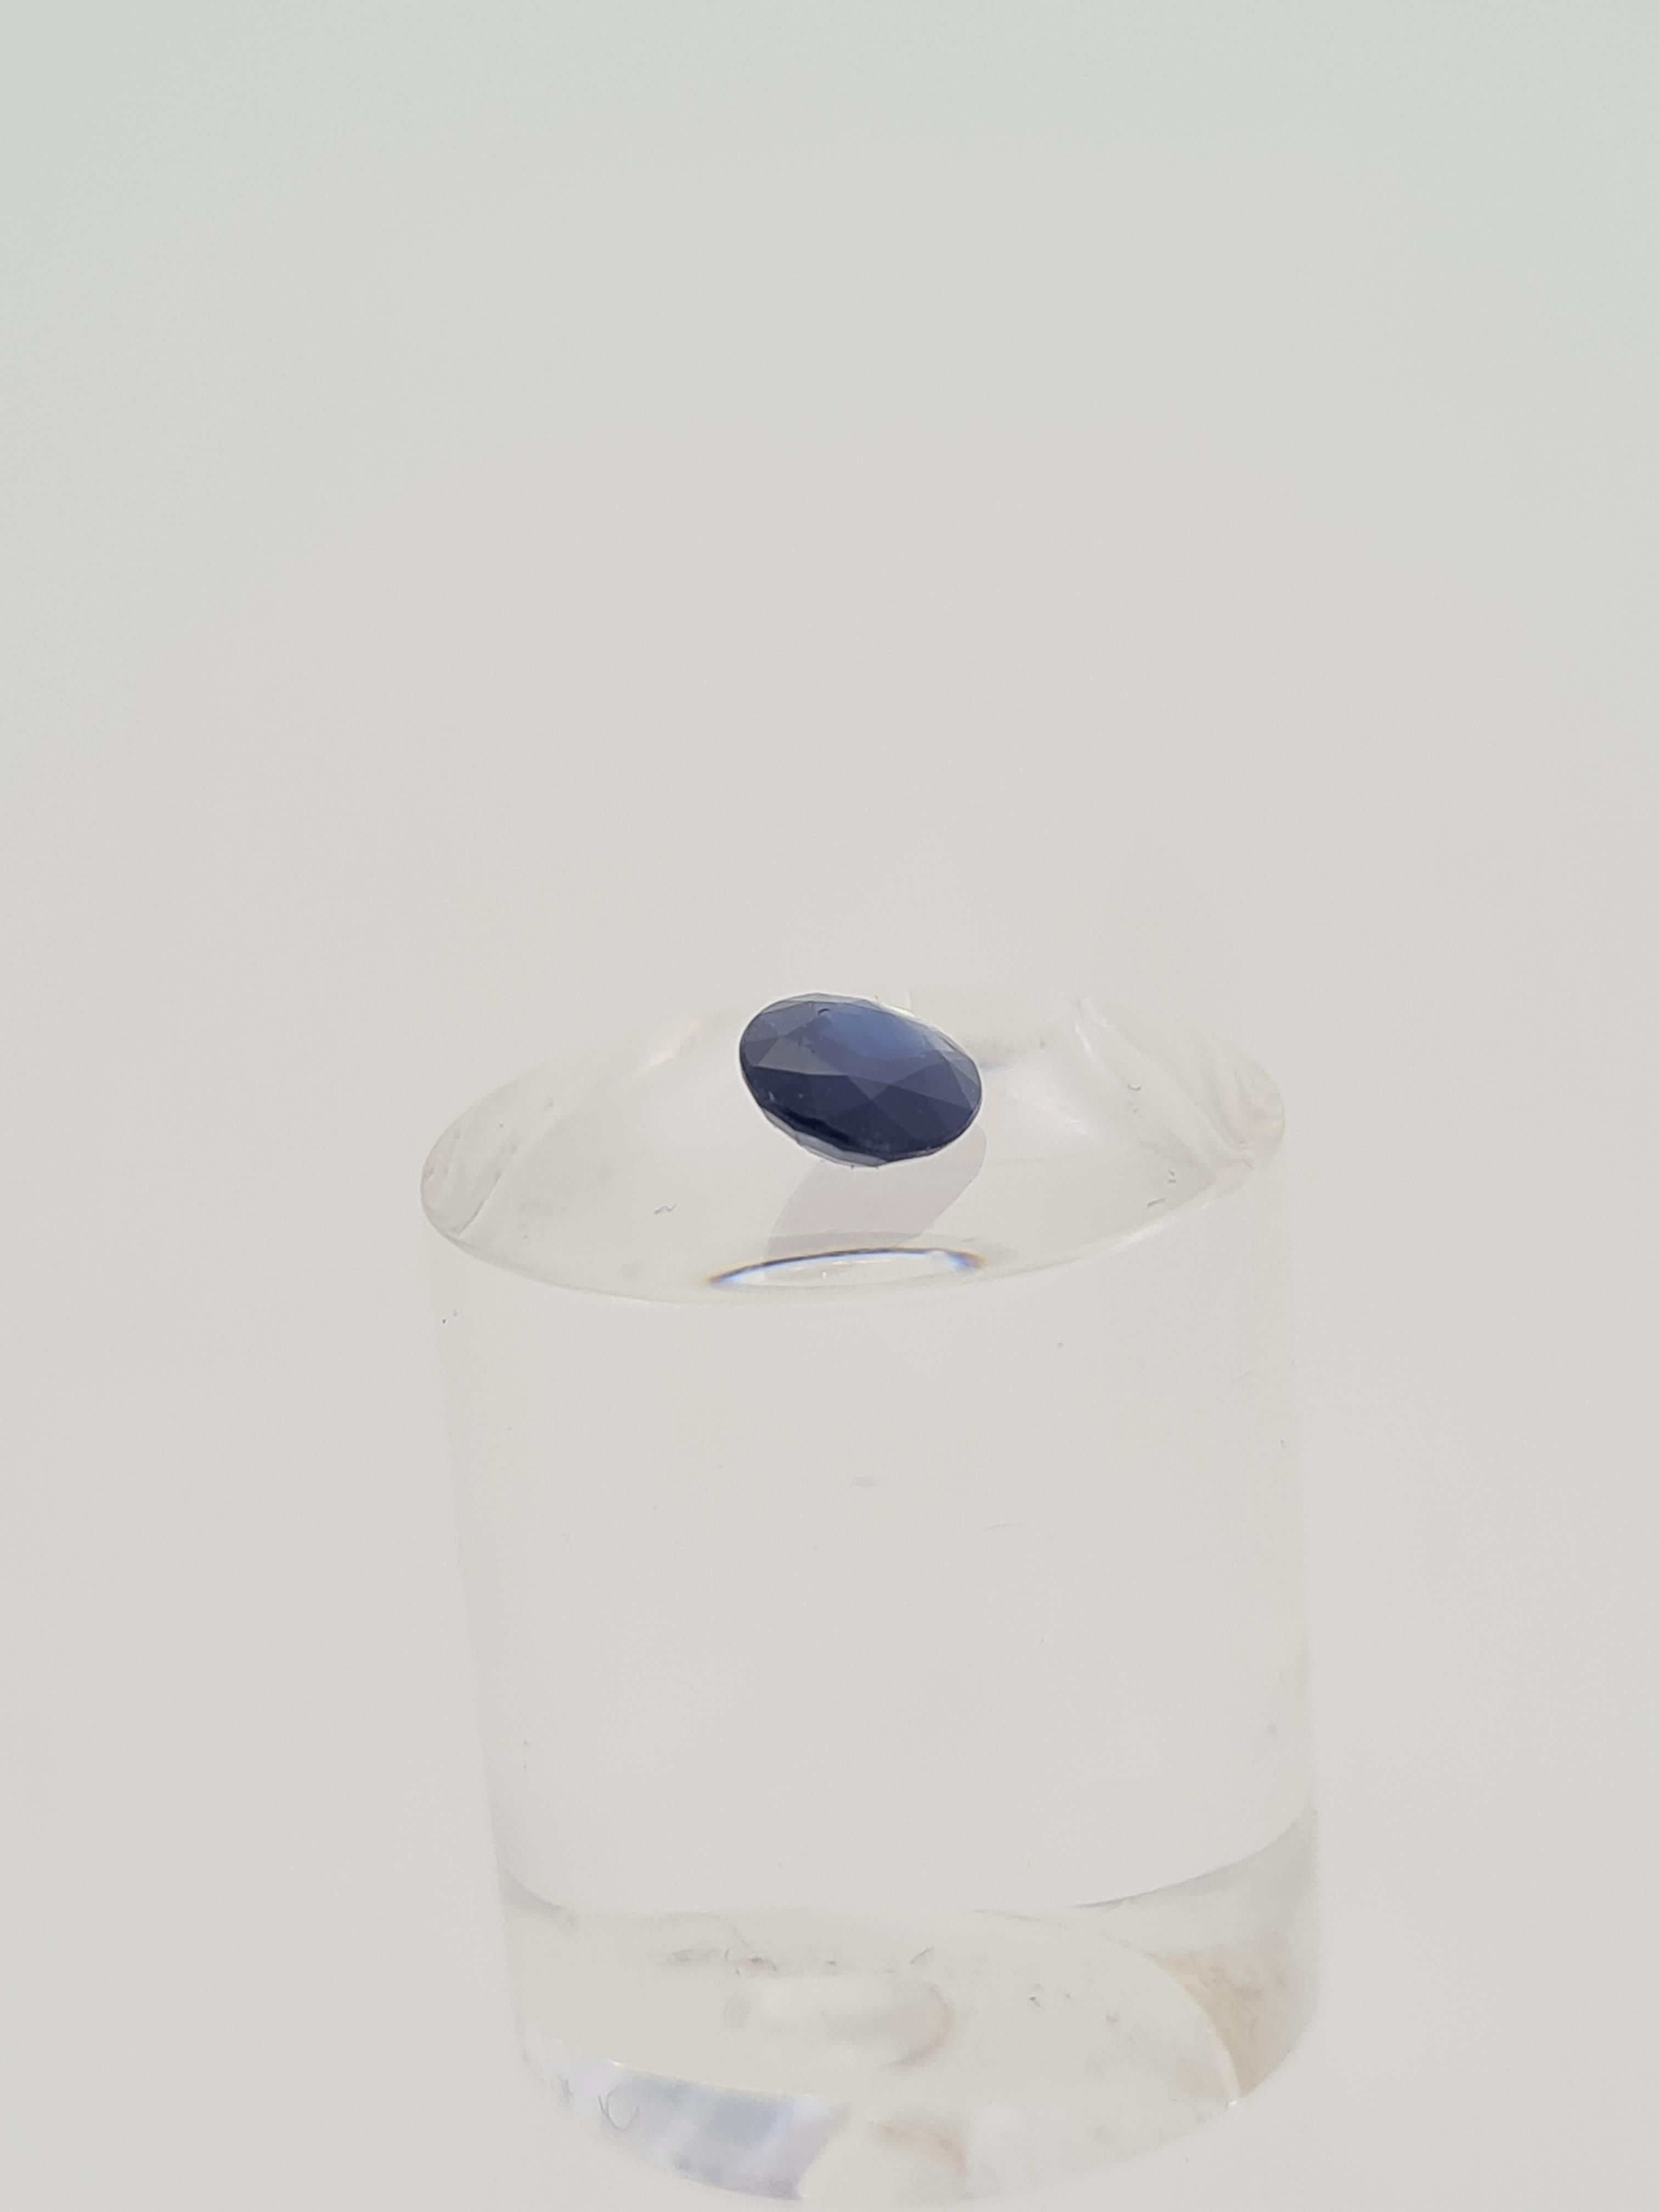 Oval cut sapphire gem stone - Image 2 of 4